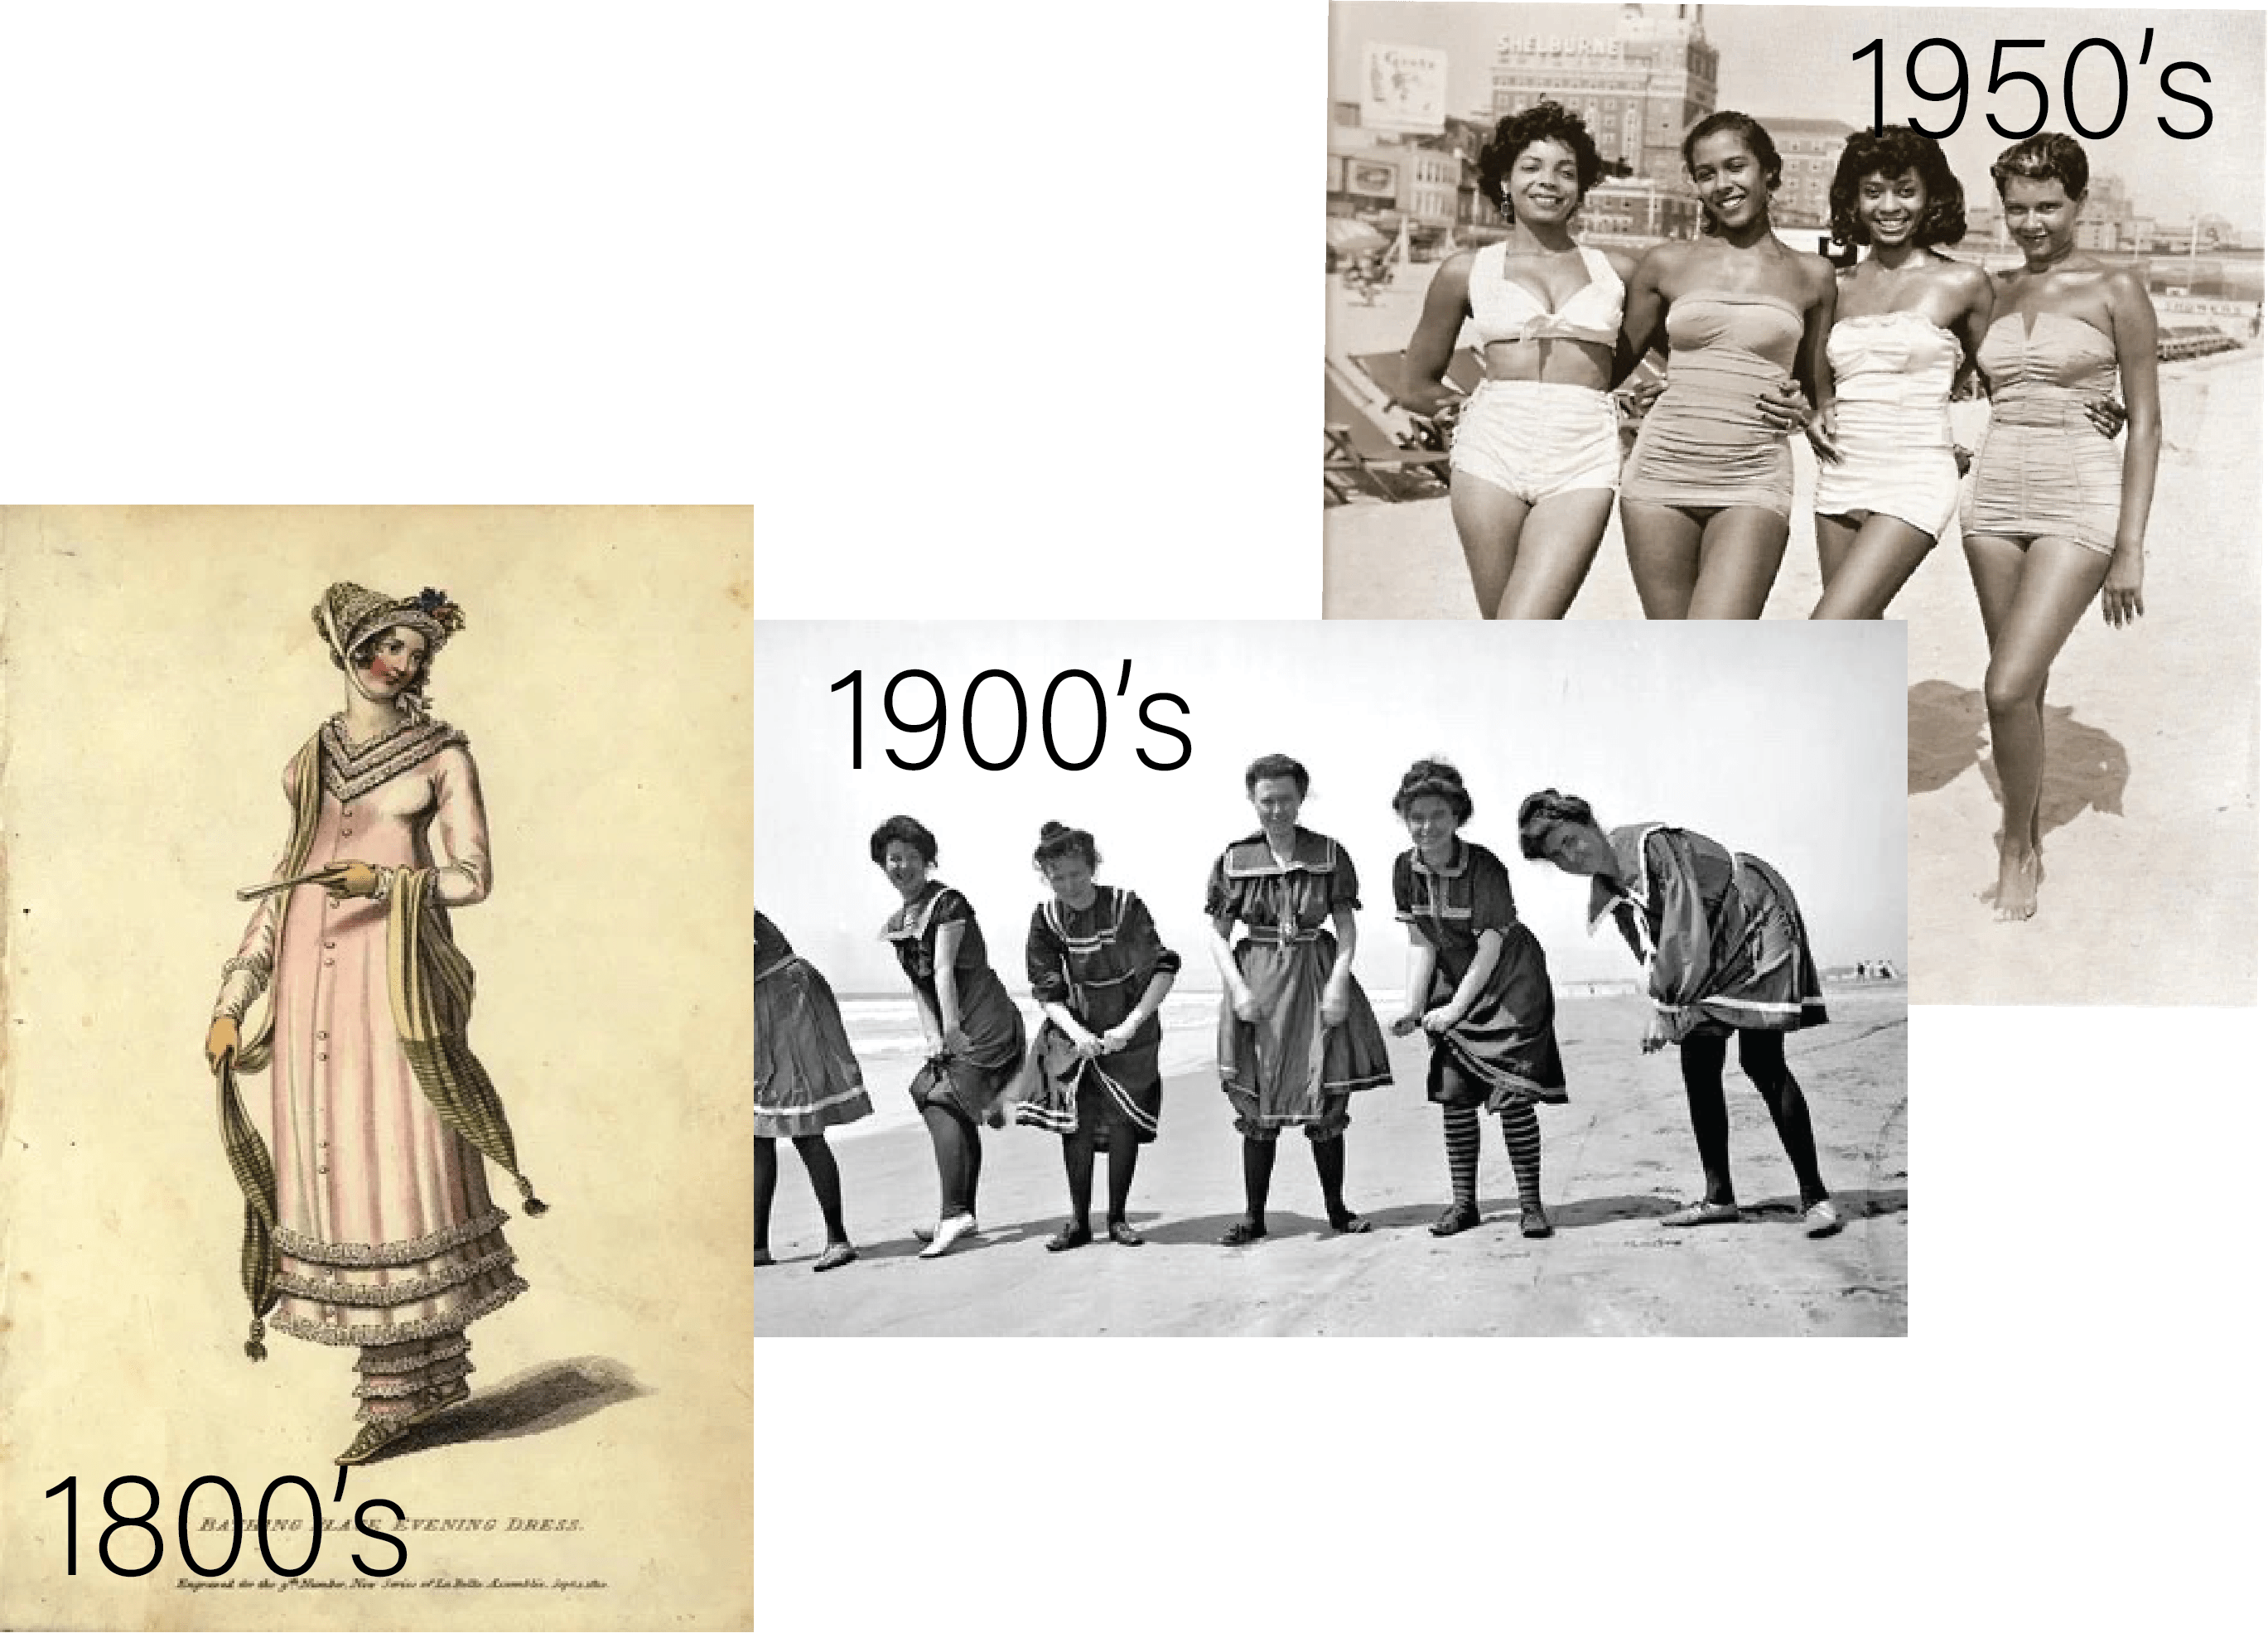 Bathing suit evolution for women 1800's - 1900's